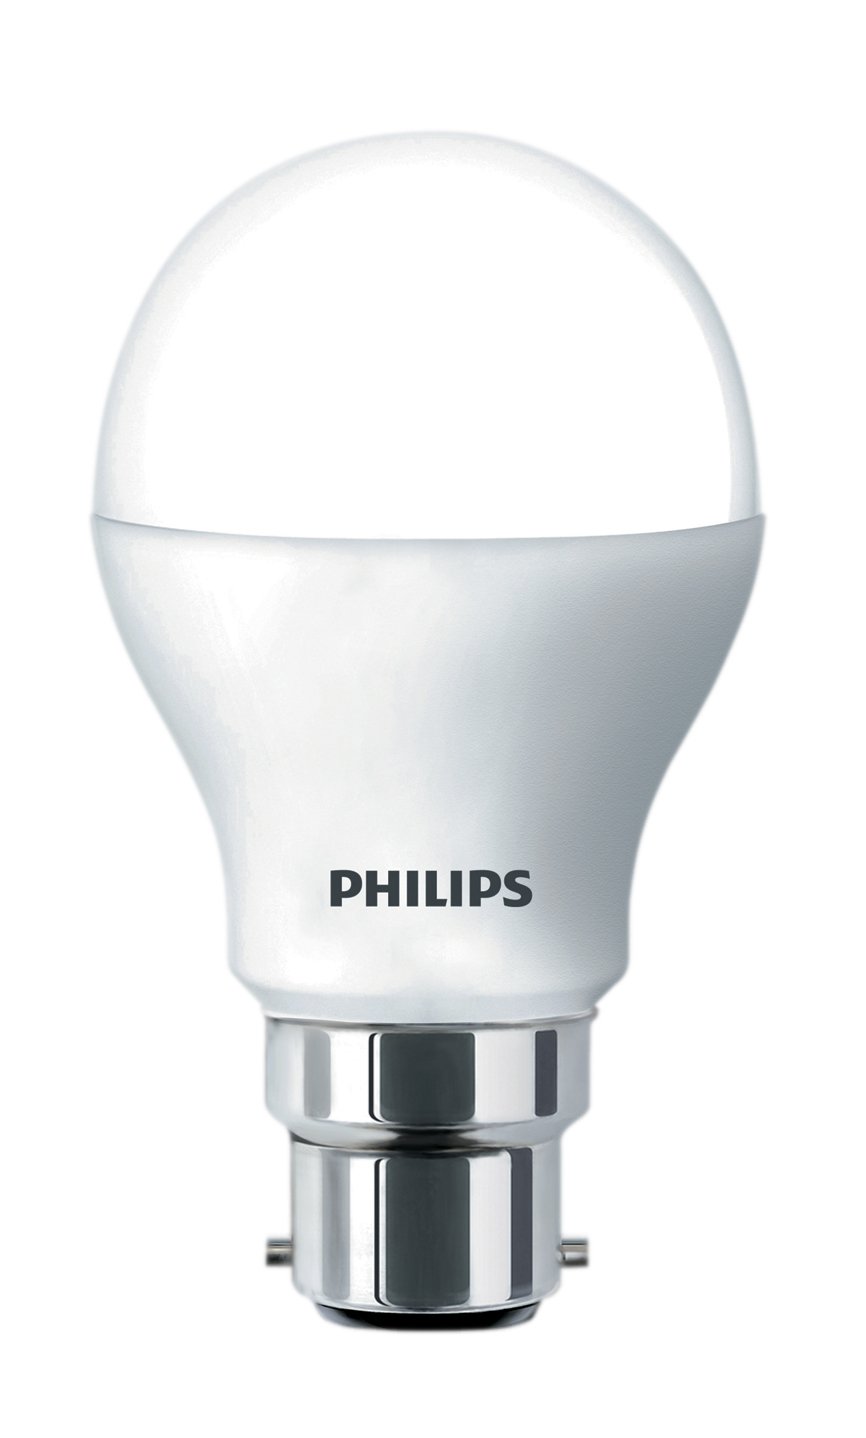 PHILIPS - LAMP 9W CDL B22